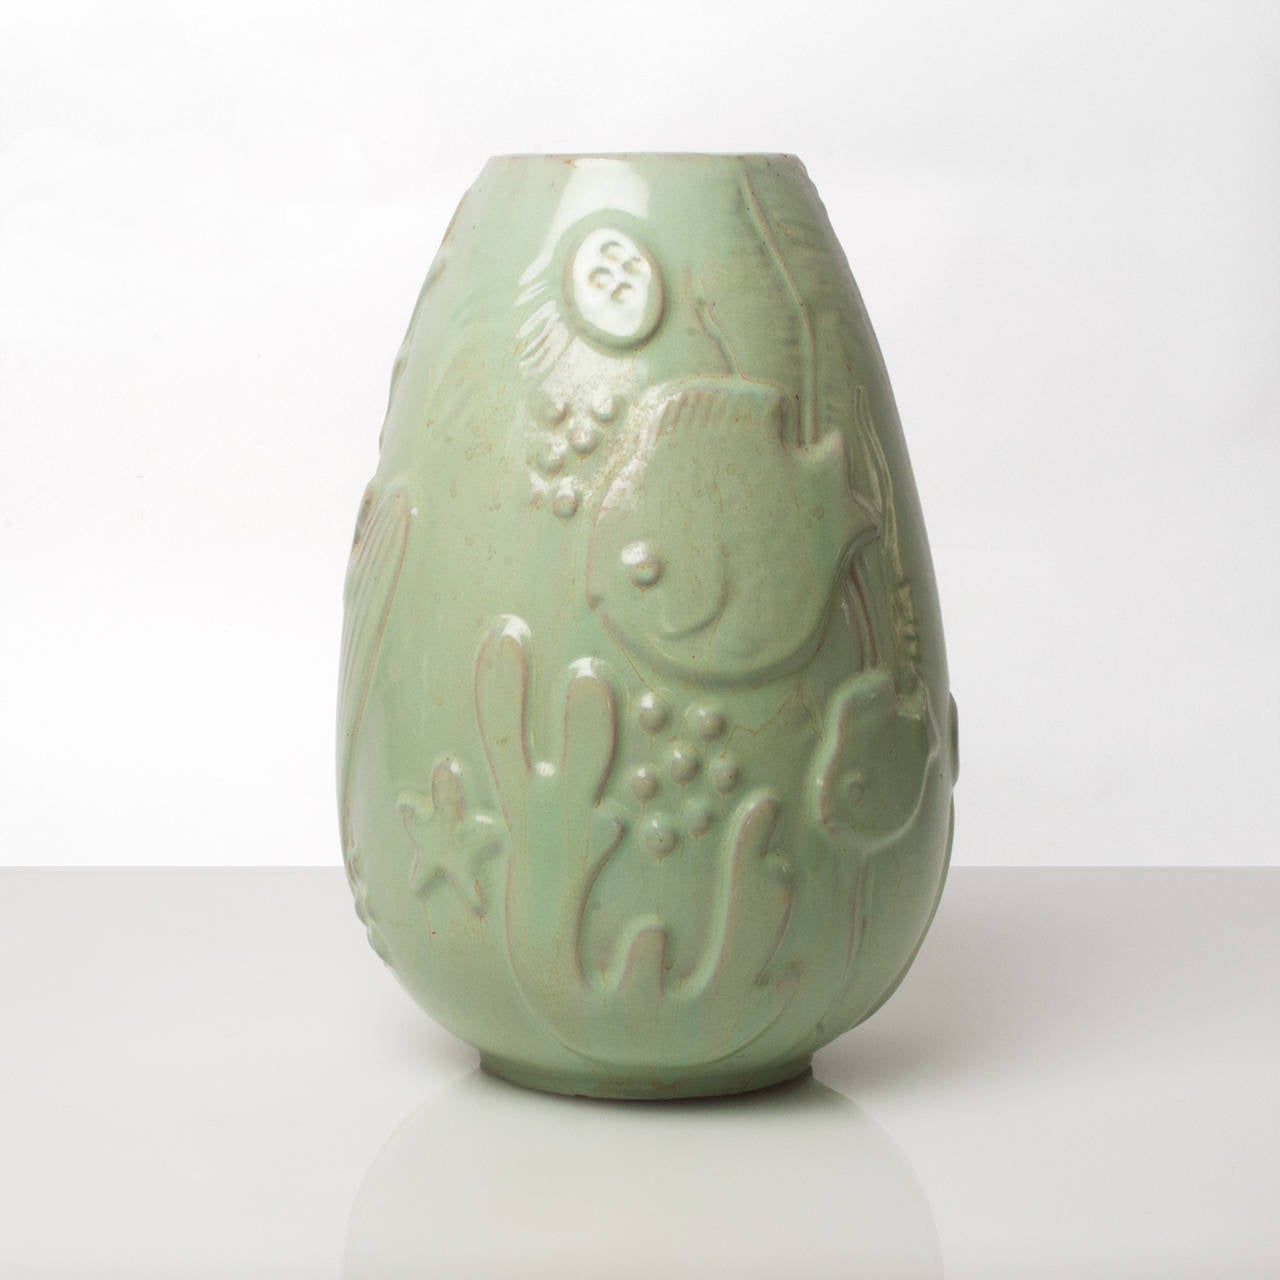 Art Deco ceramic vase with underwater motif designed by Anna-Lisa Thomson, made by Upsala Ekeby, Sweden. 

H: 12